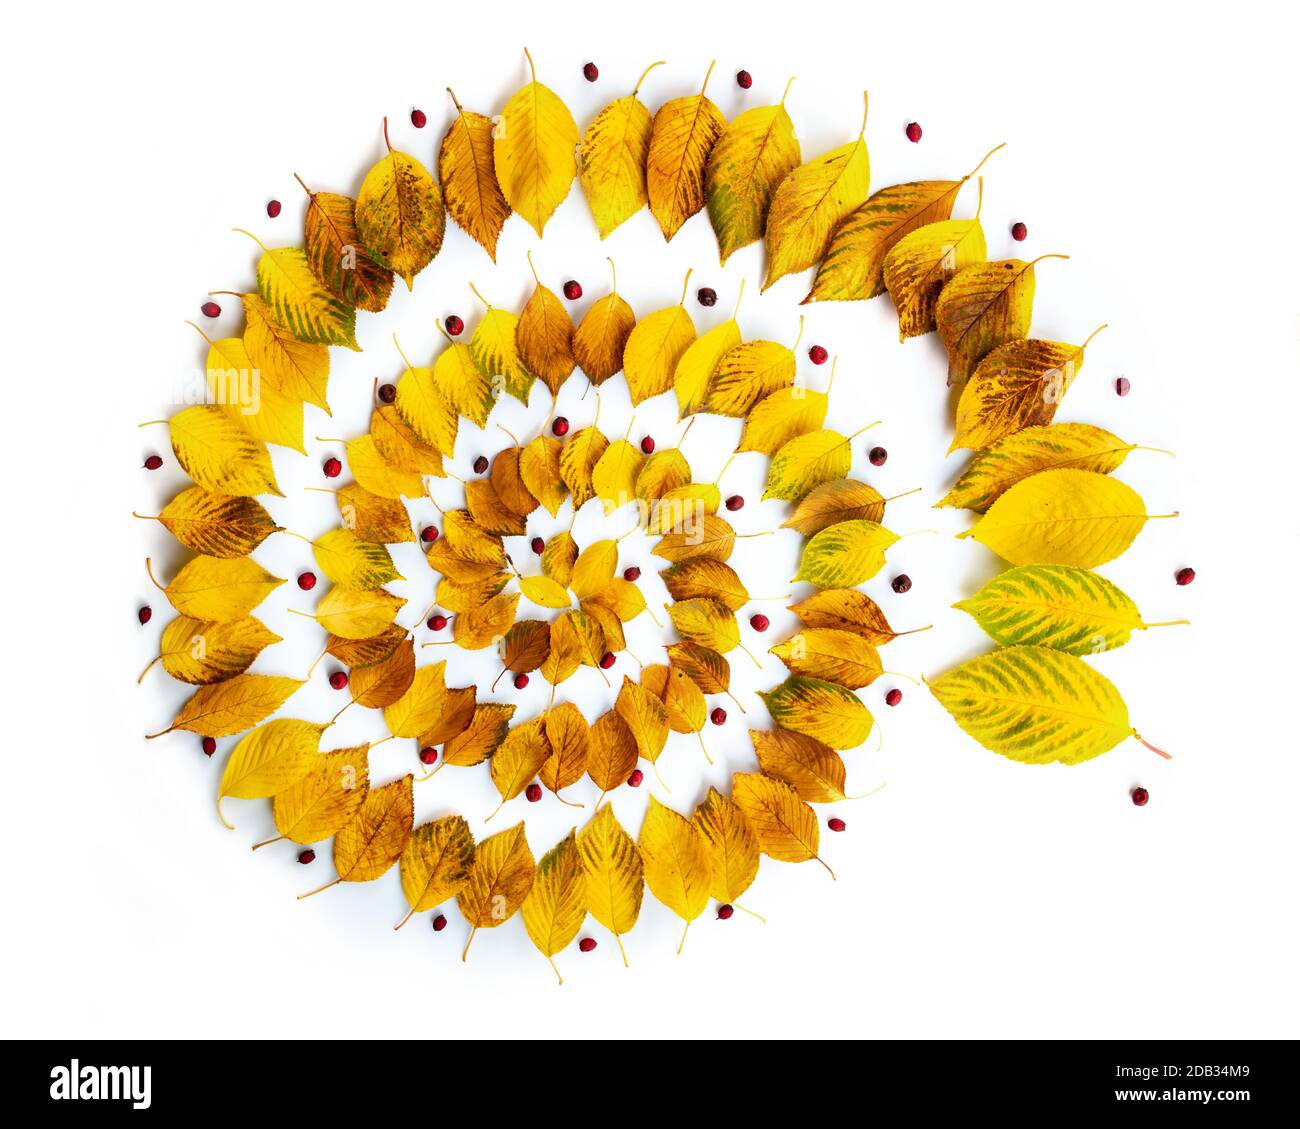 Spirale foglie autunnali Foto Stock